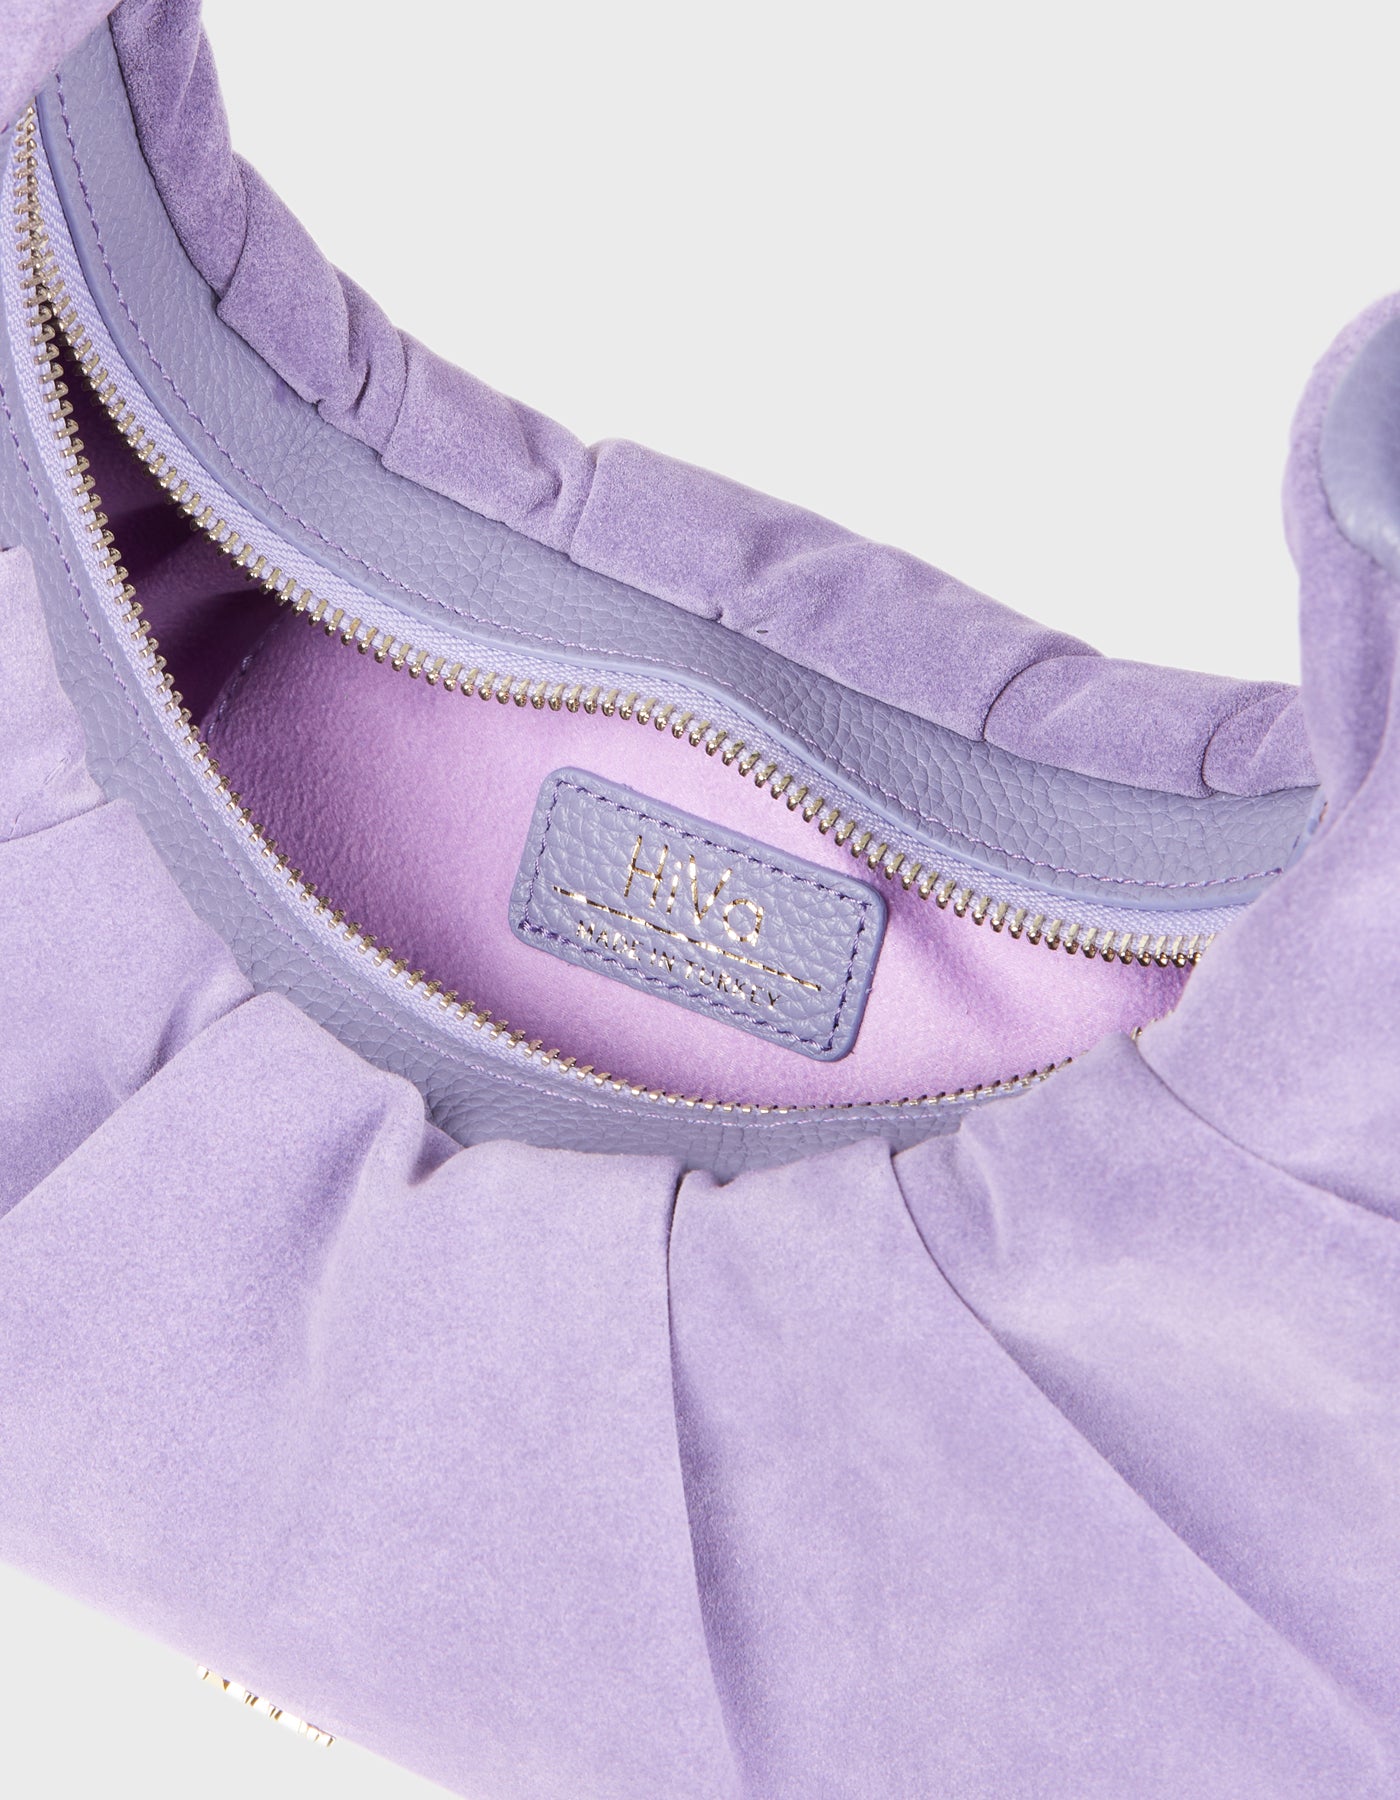 HiVa Atelier | Croissant Bag Lavender Silk & Suede | Beautiful and Versatile